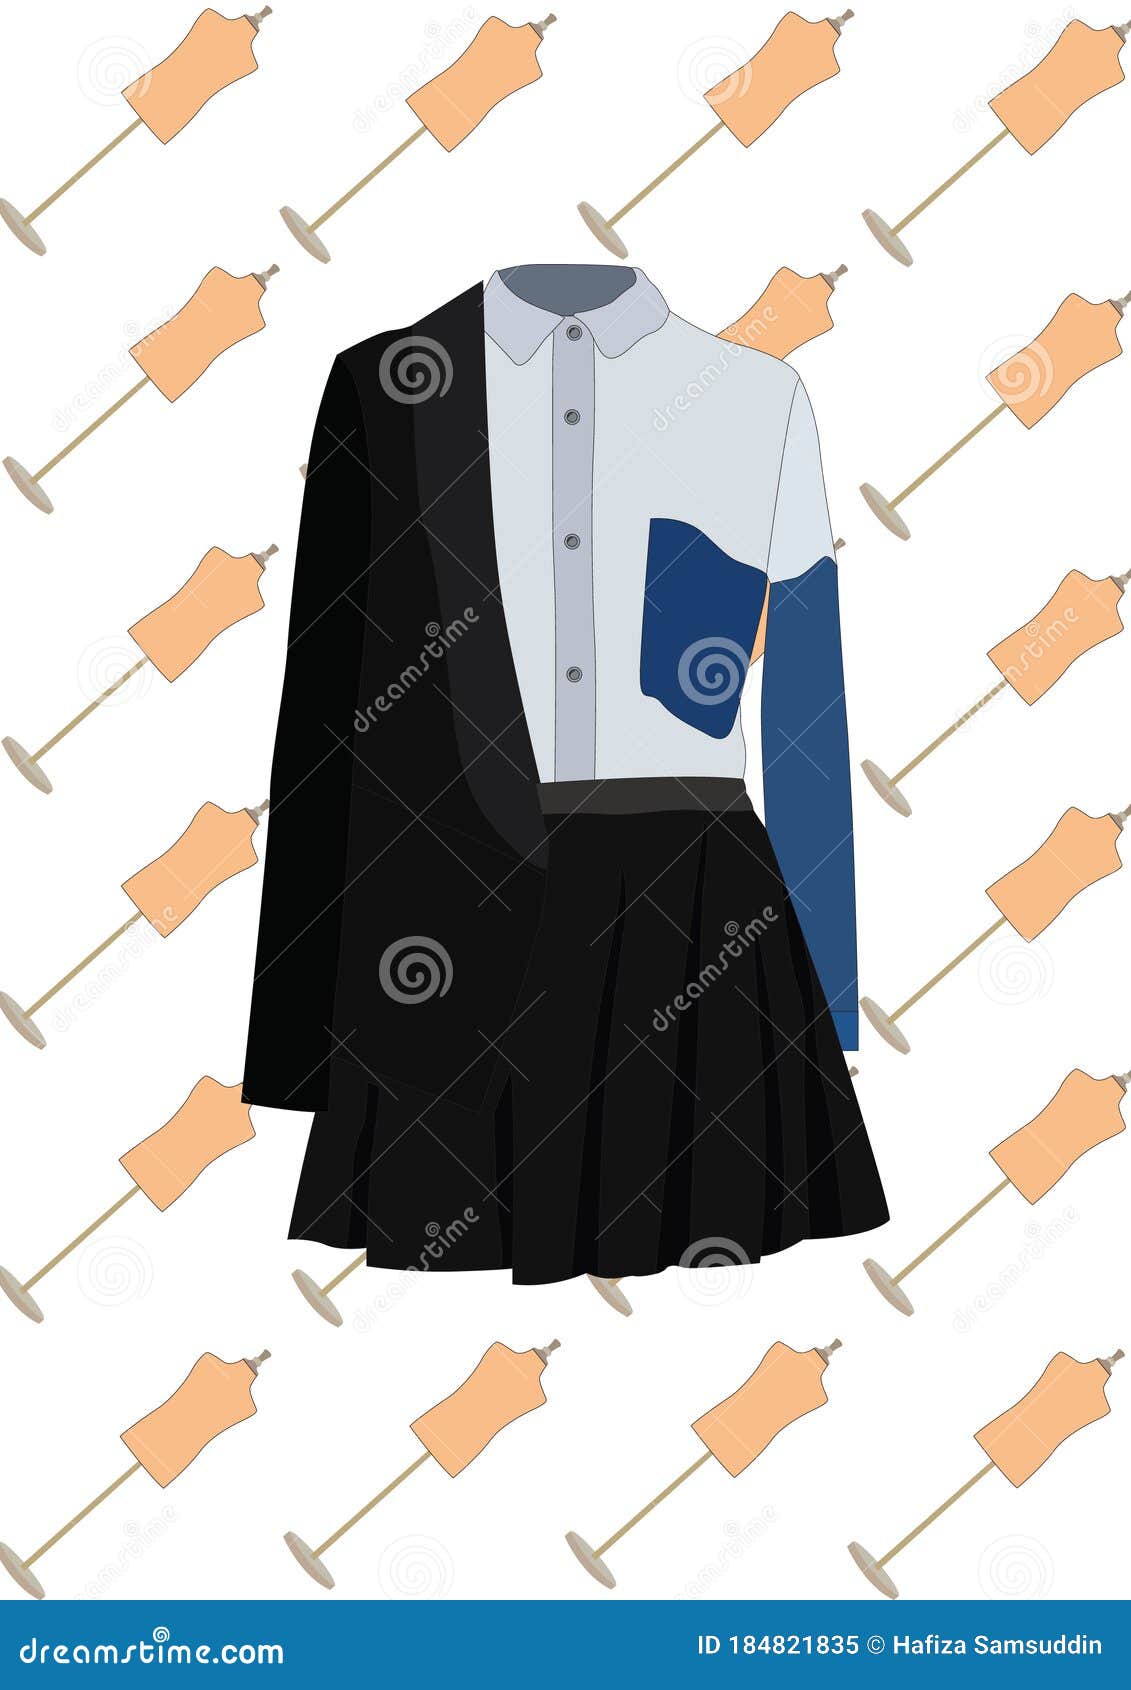 Blouse and Skirt with Blazer. Vector Illustration Decorative Background  Design Stock Illustration - Illustration of trendy, stylish: 184821835